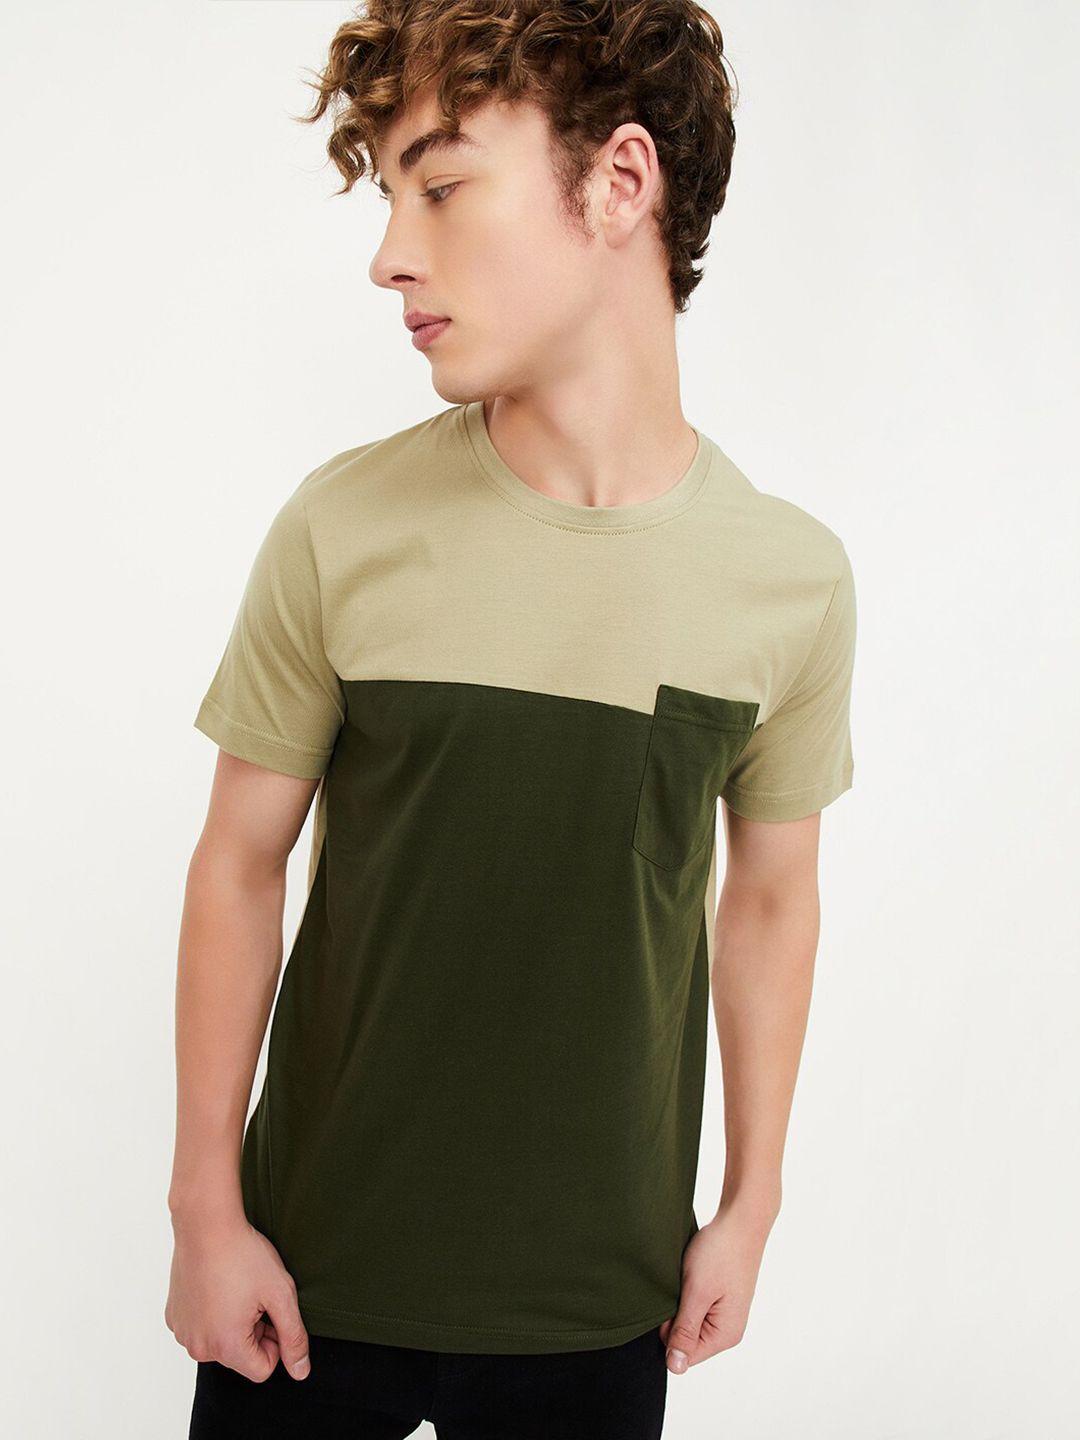 max-men-green-pockets-t-shirt